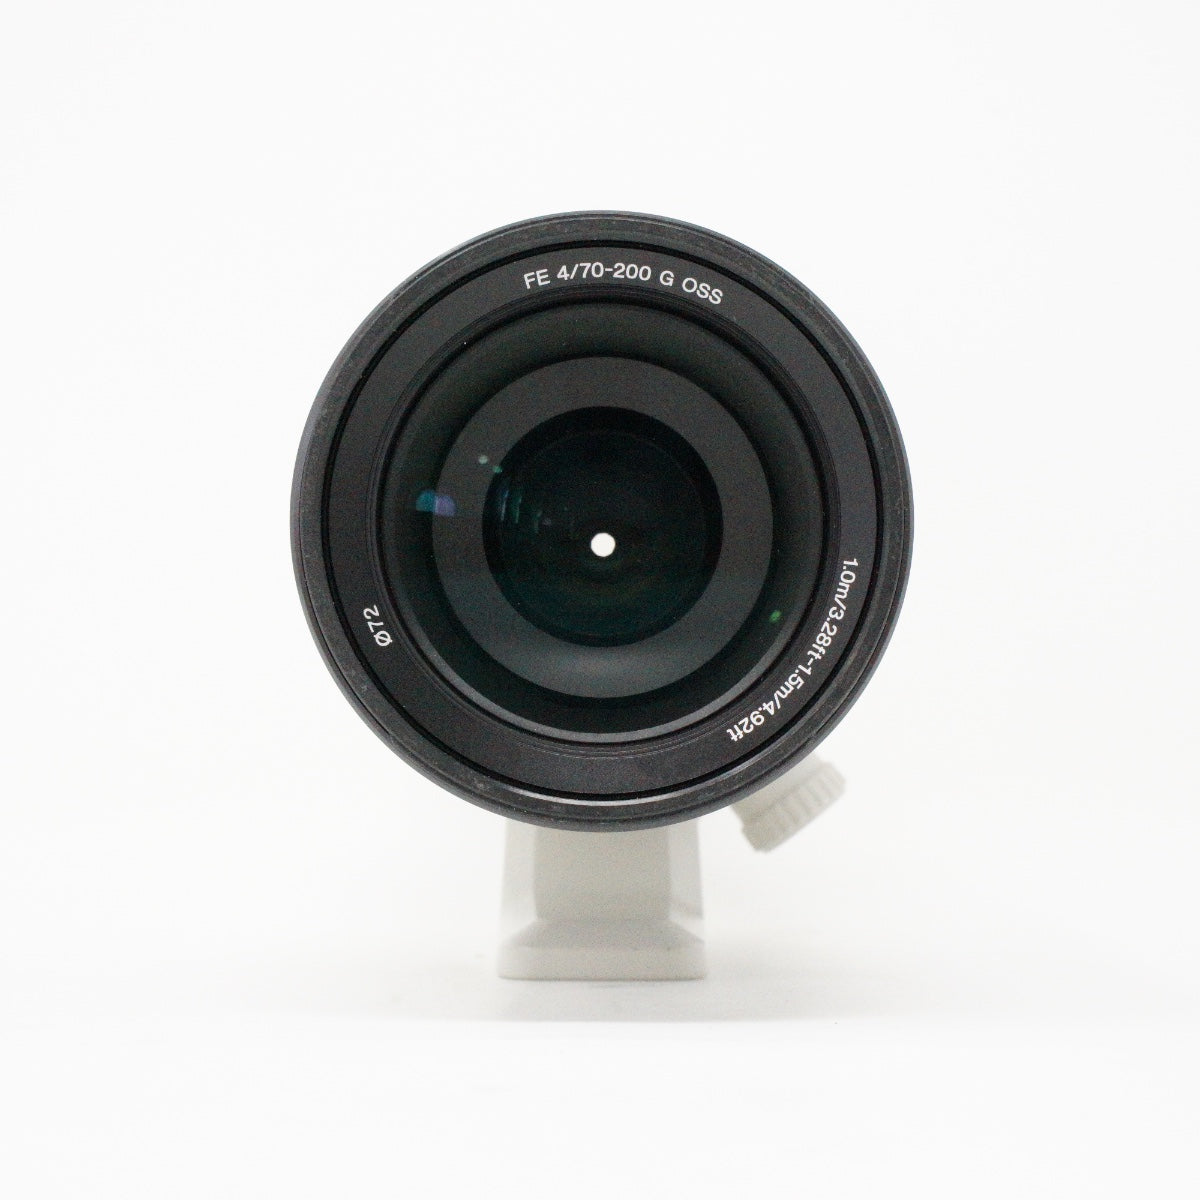 Used Sony 70-200mm F4 G OSS lens in Sony E-Mount